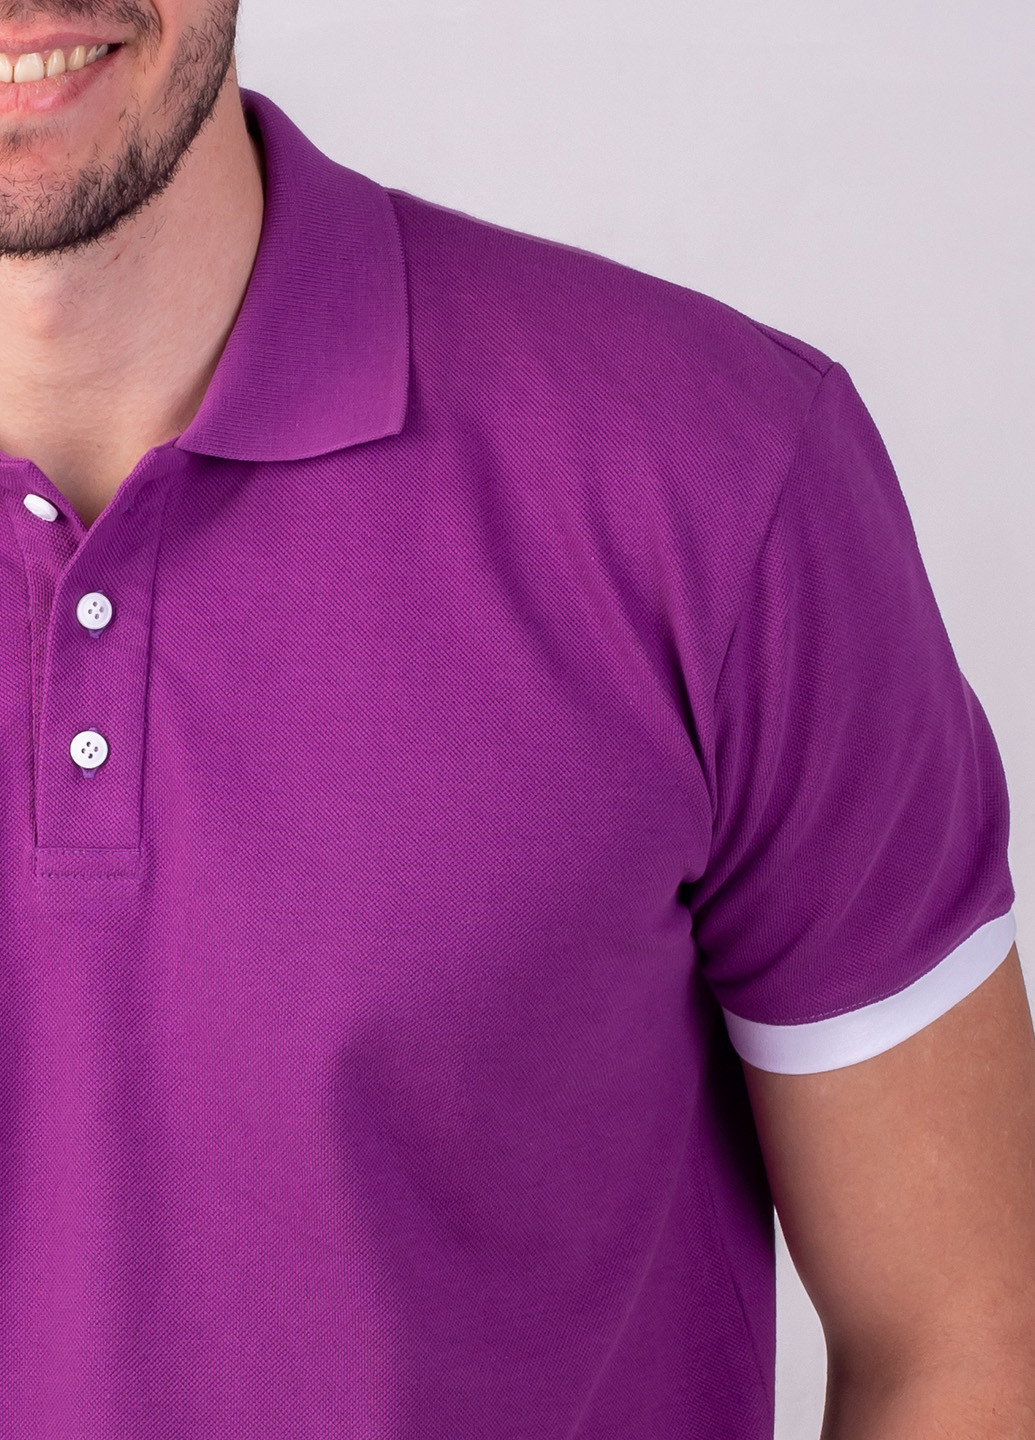 Фиолетовая футболка-футболка поло мужская для мужчин TvoePolo